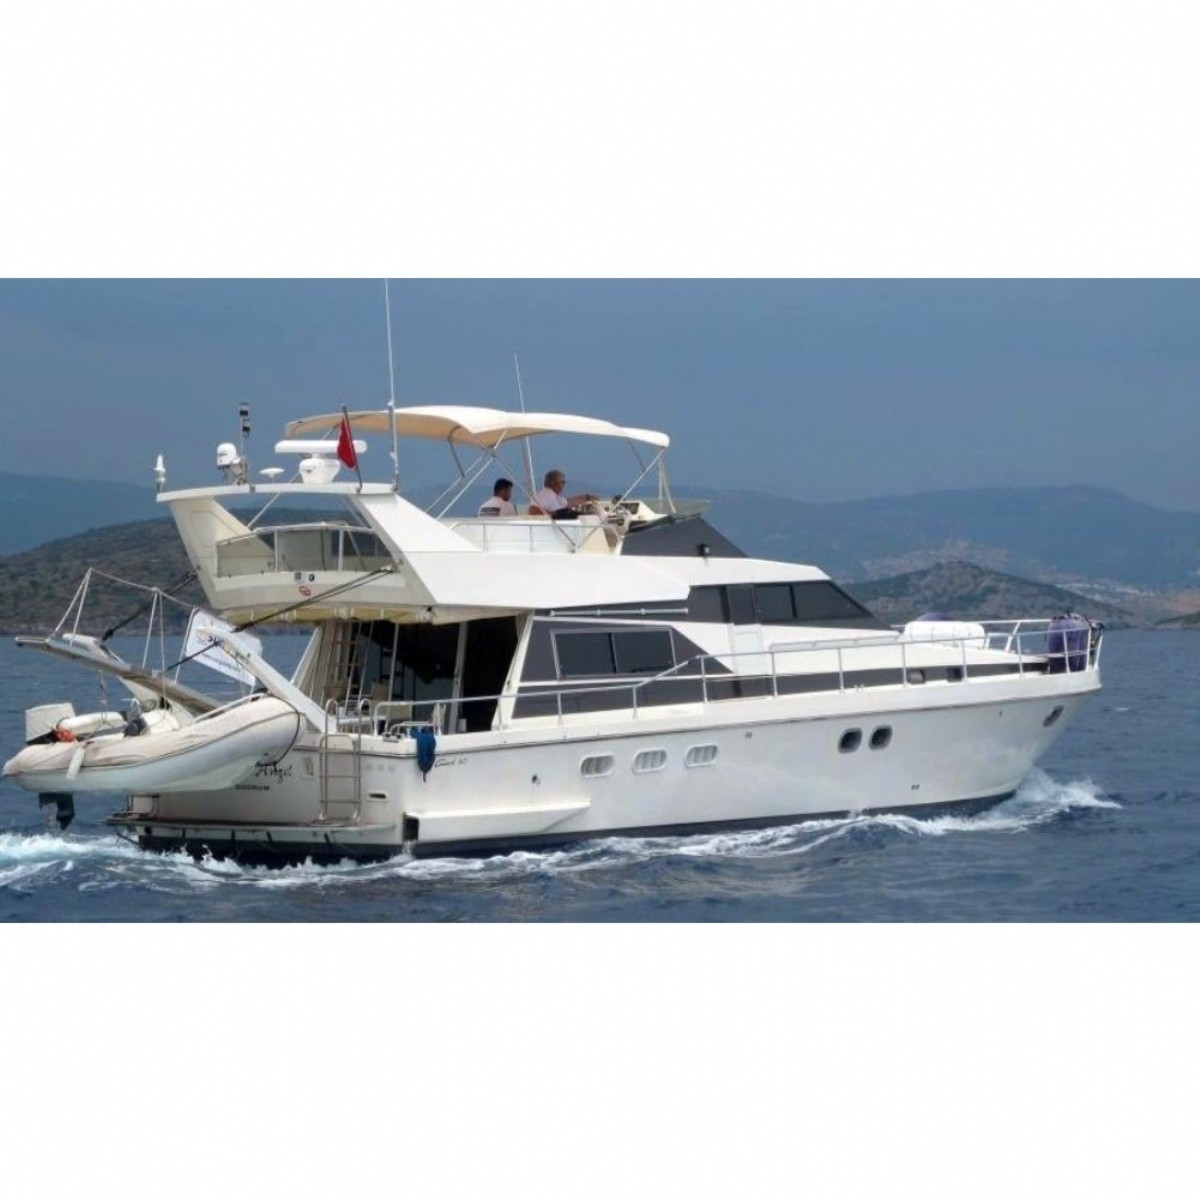 Motor Yacht Fleets | M399 - Motoryacht Charter Turkey 6 person Luxury | M399 | Private Yacht charter Turkey, VIP Charter, Yachting Turkey, gulet Turkey, cabin charter , yachtrentalsTurkey, boat charter Turkey, Bodrum yacht charter, VIP Motoryacht | 